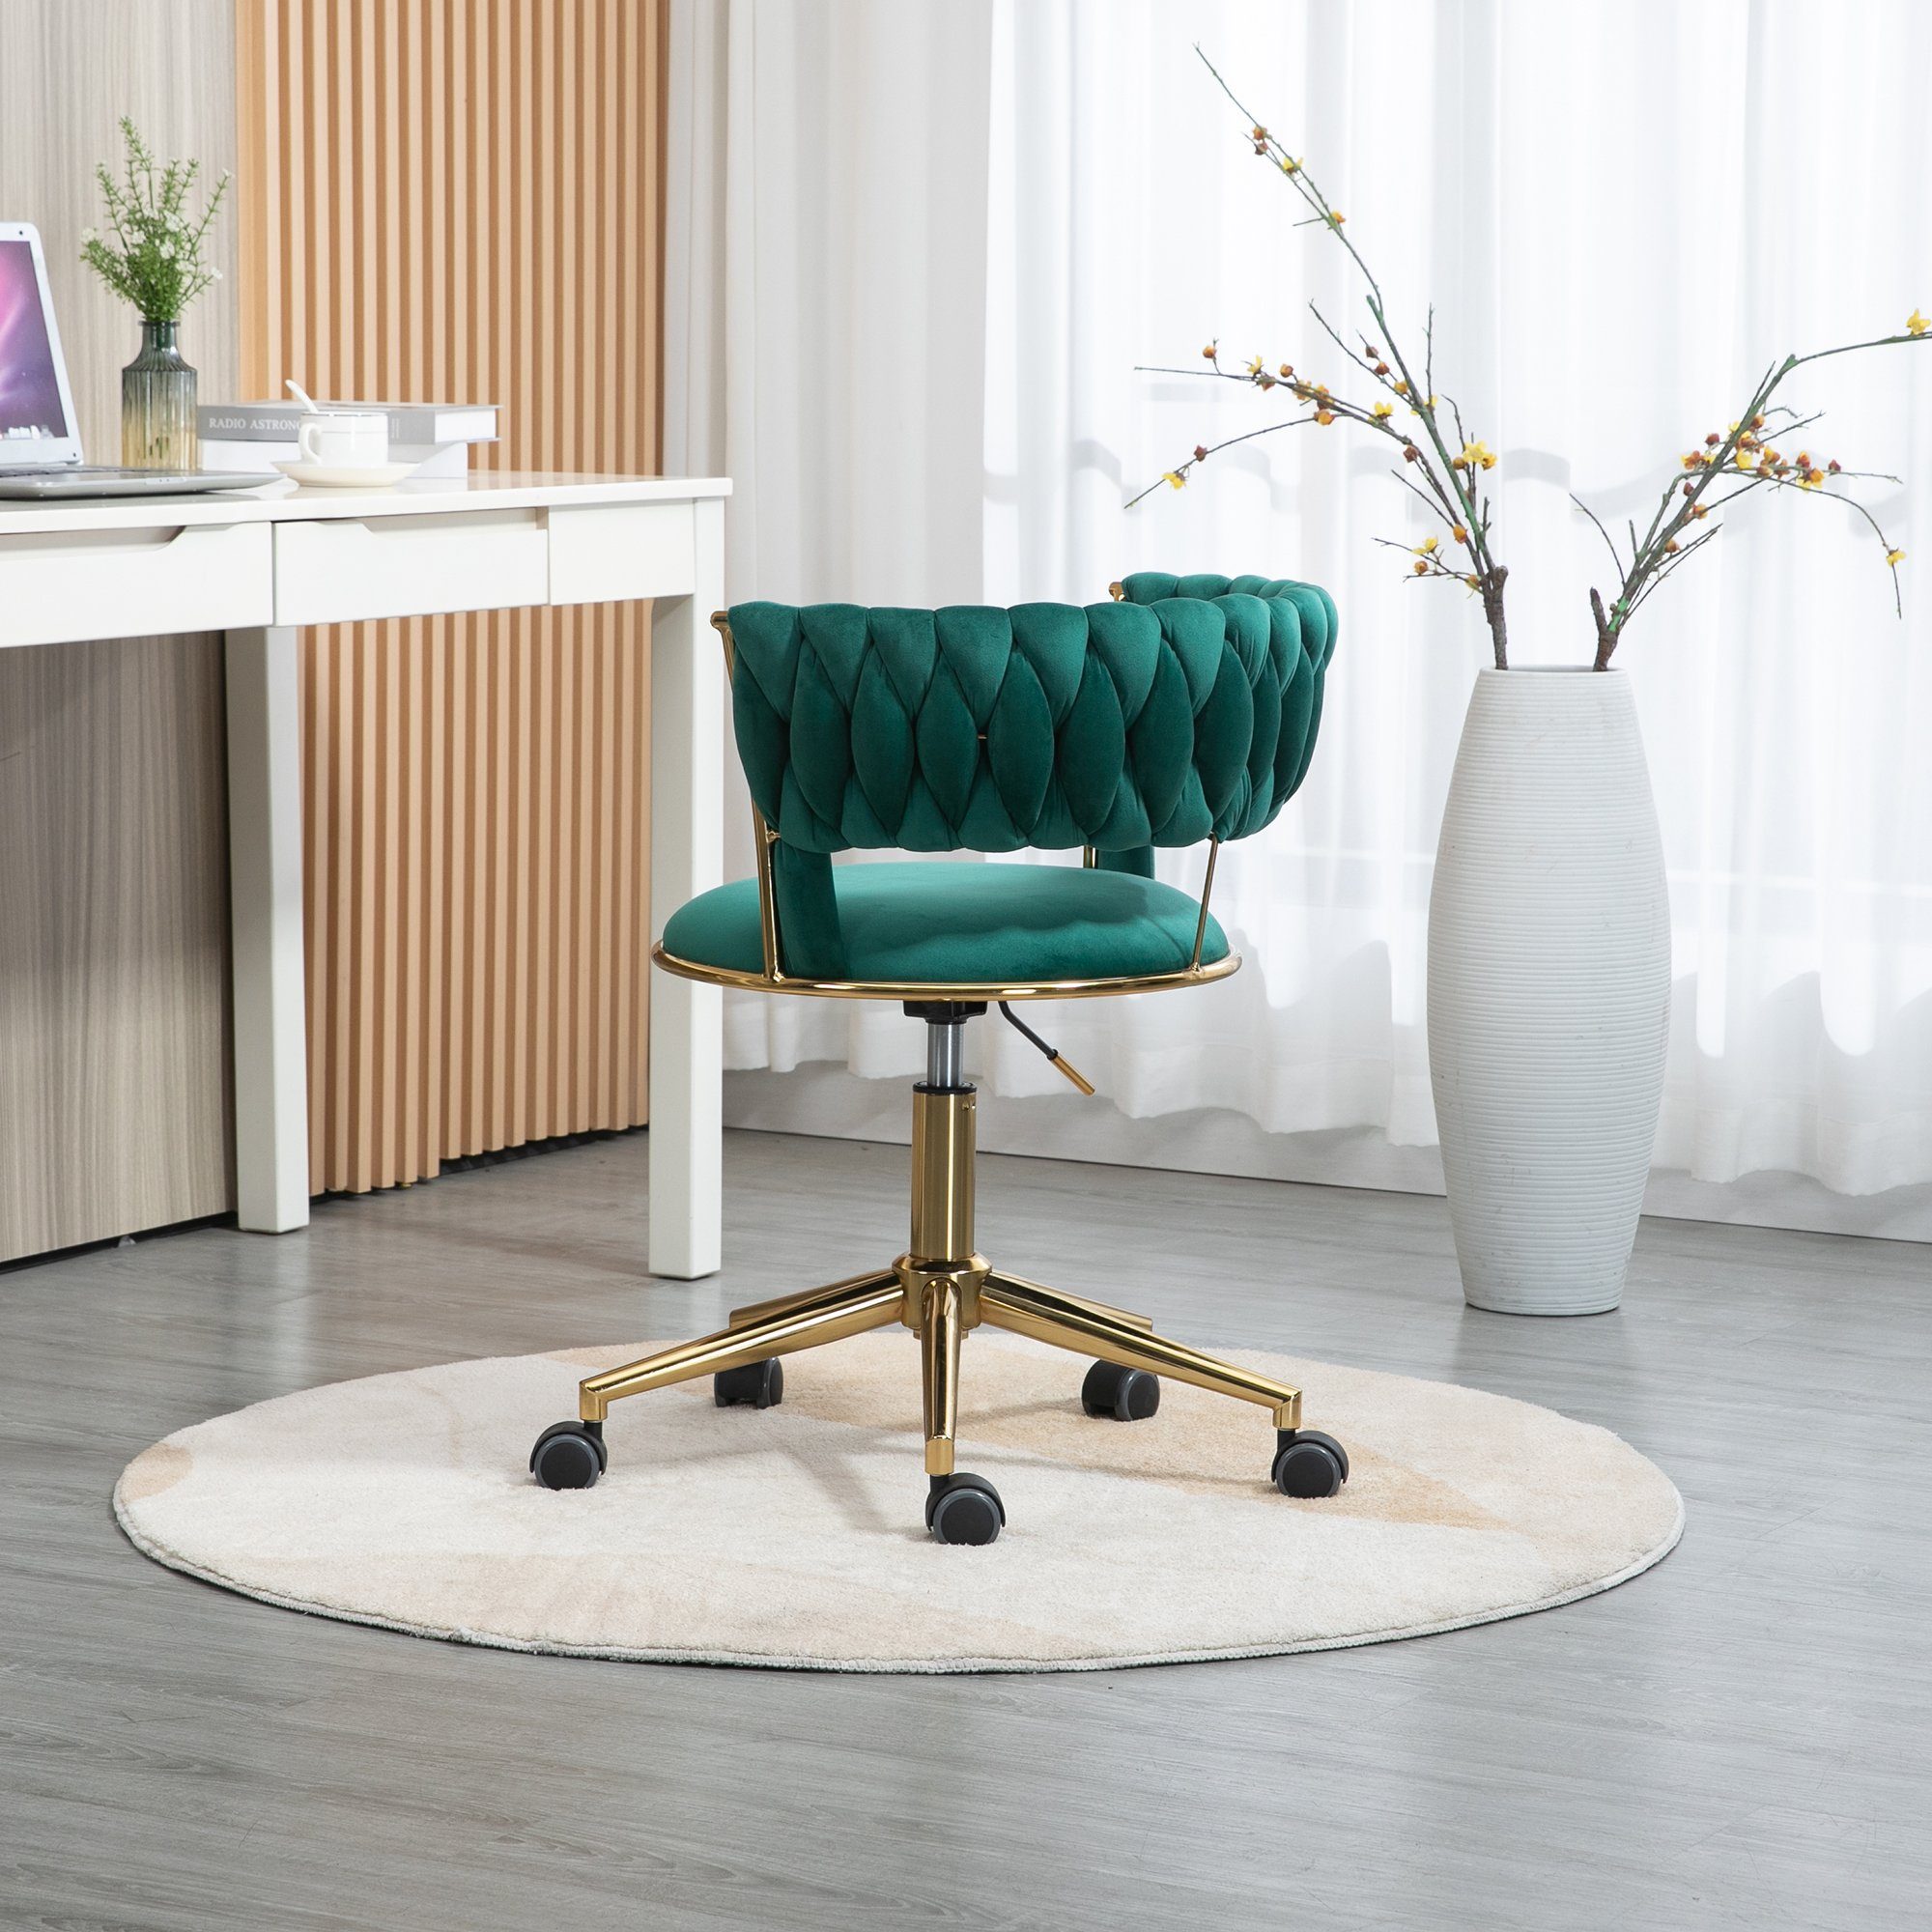 Celya Bürostuhl Samt Drehstuhl Computerstuhl, höhenverstellbar grün Polsterfarbe 360°drehbar für Bürodame und Mädchen perfekt